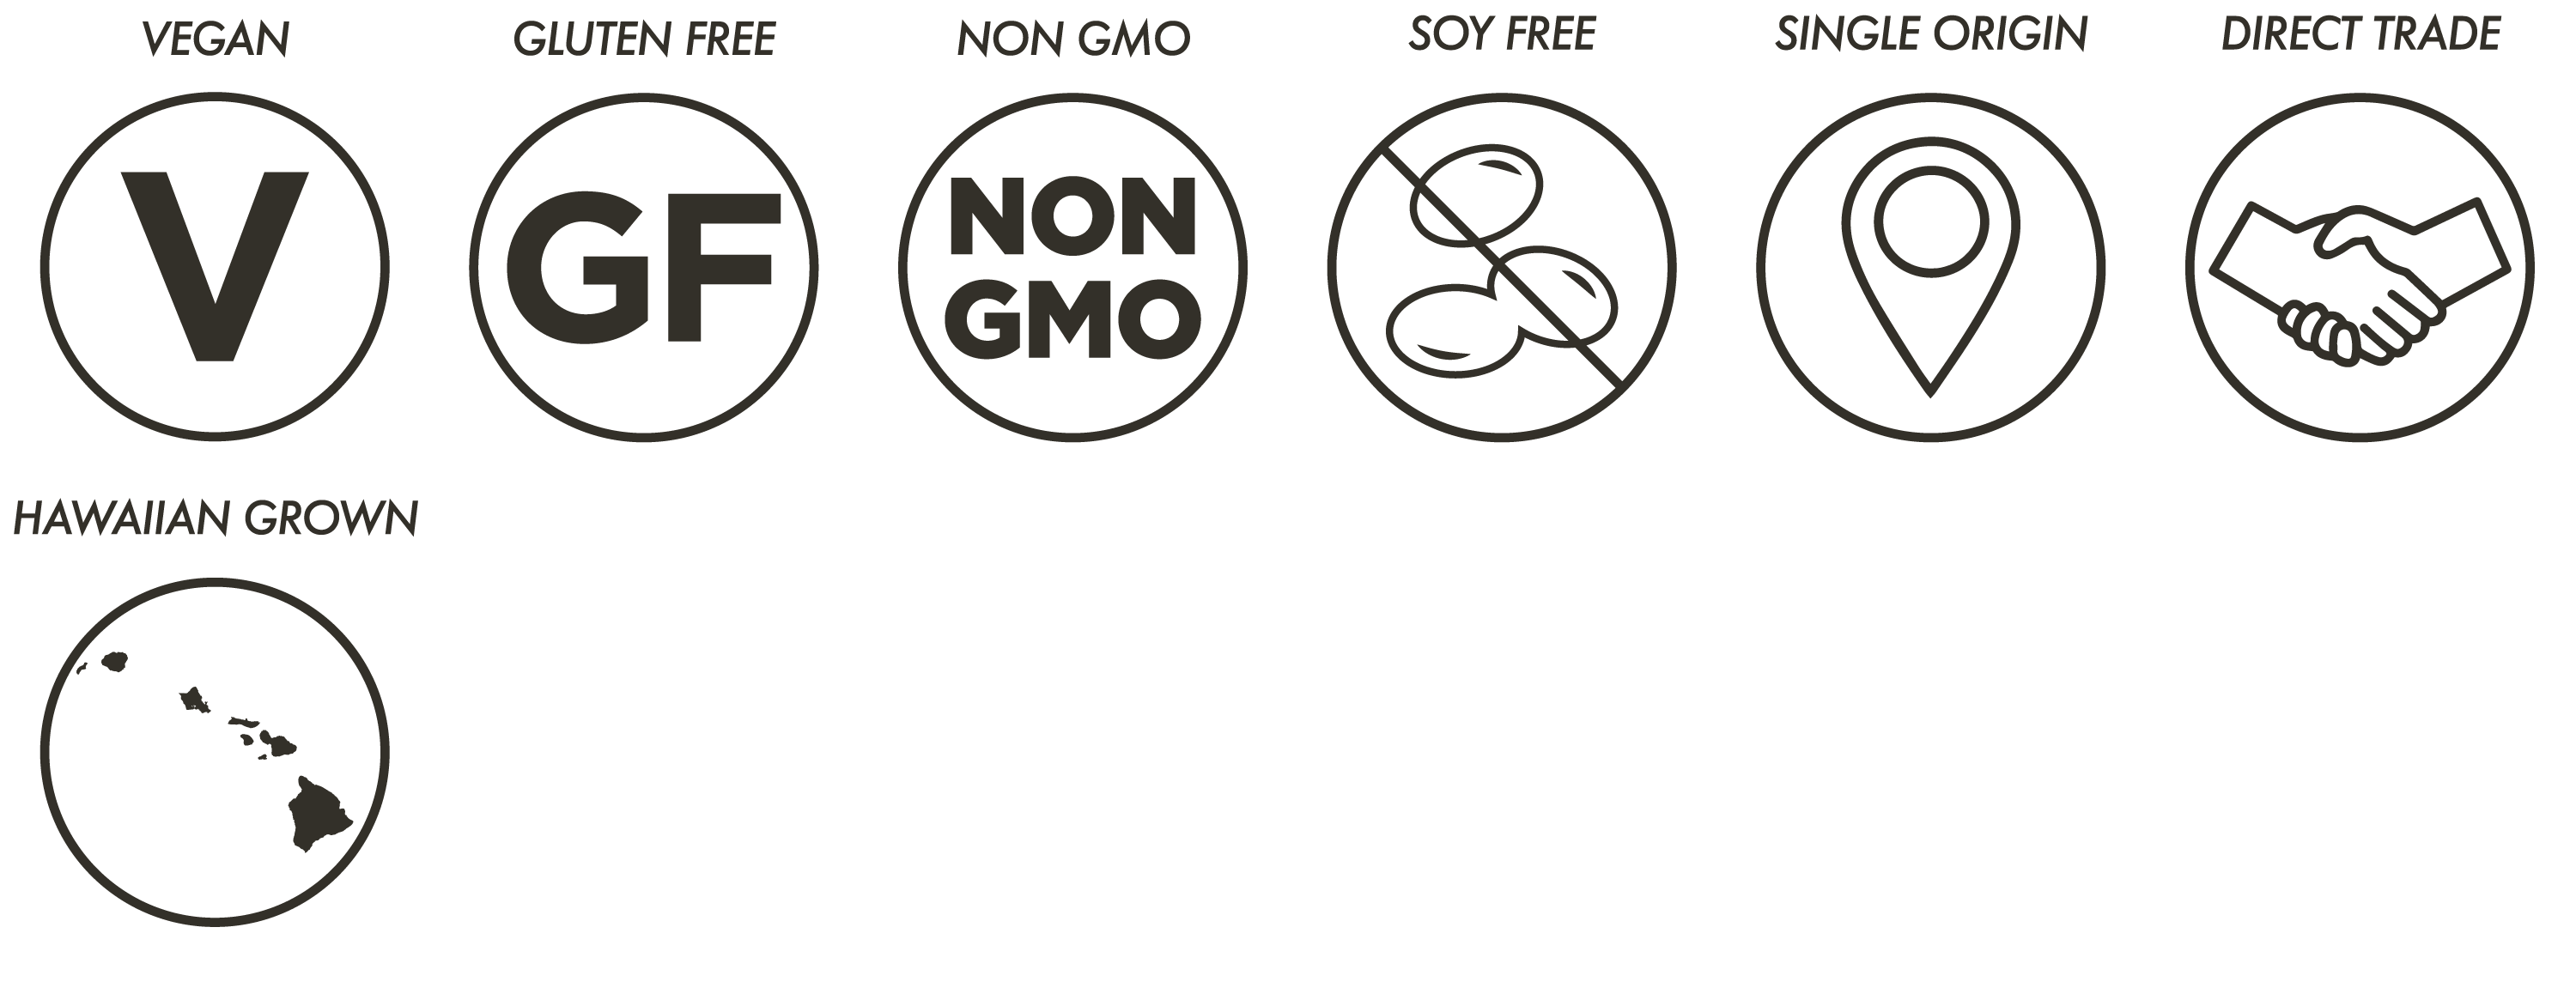 vegan, gluten-free, non-gmo, soy free, single origin, direct trade, hawaiian grown